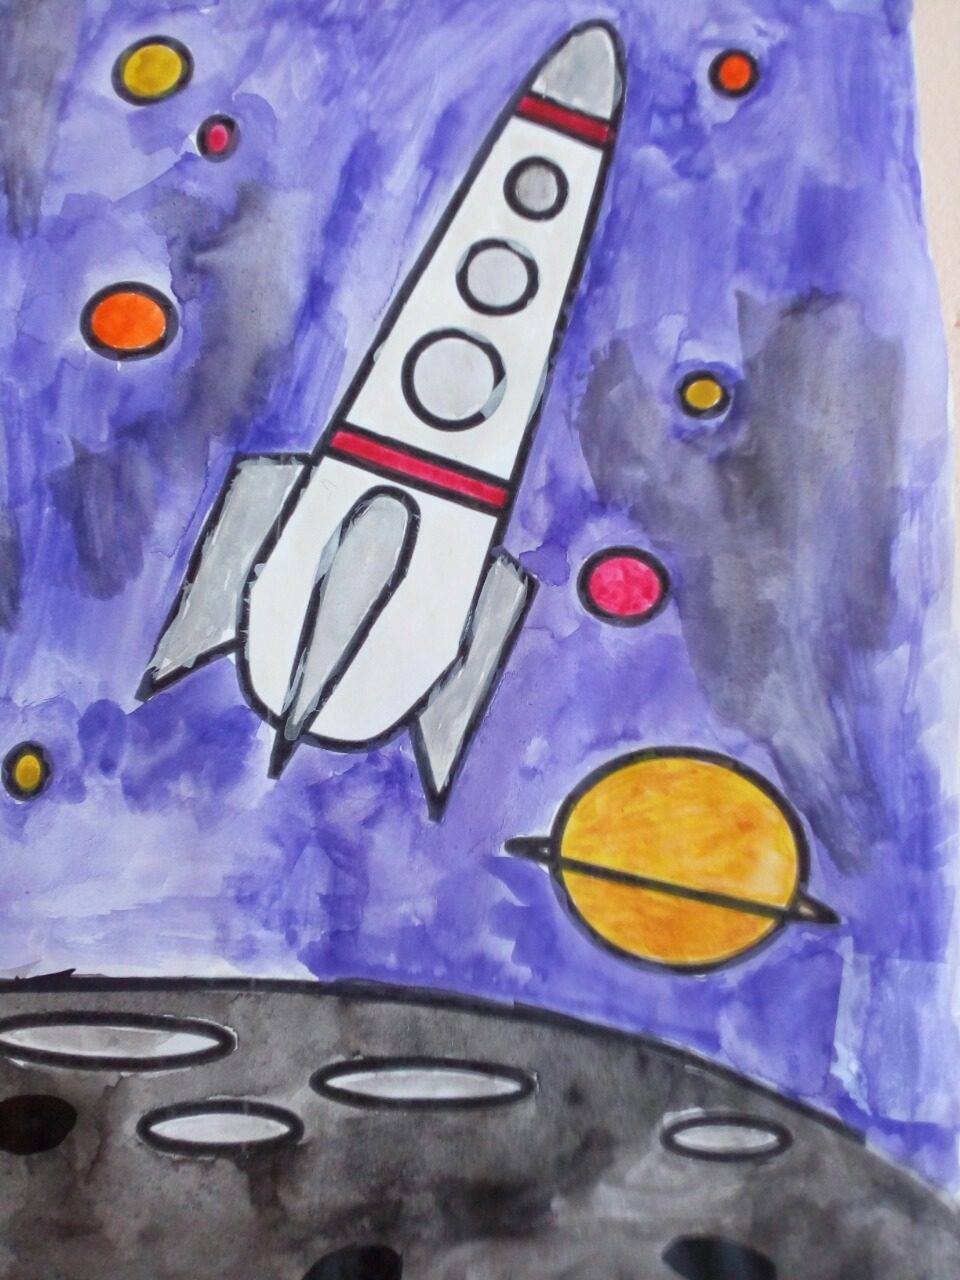 Рисунок на тему космонавтики 1 класс. Рисунок на тему космос. Рисунок на космическую тему. Детский рисунок на тему космос. Детский рисунок ко Дню космонавтики.